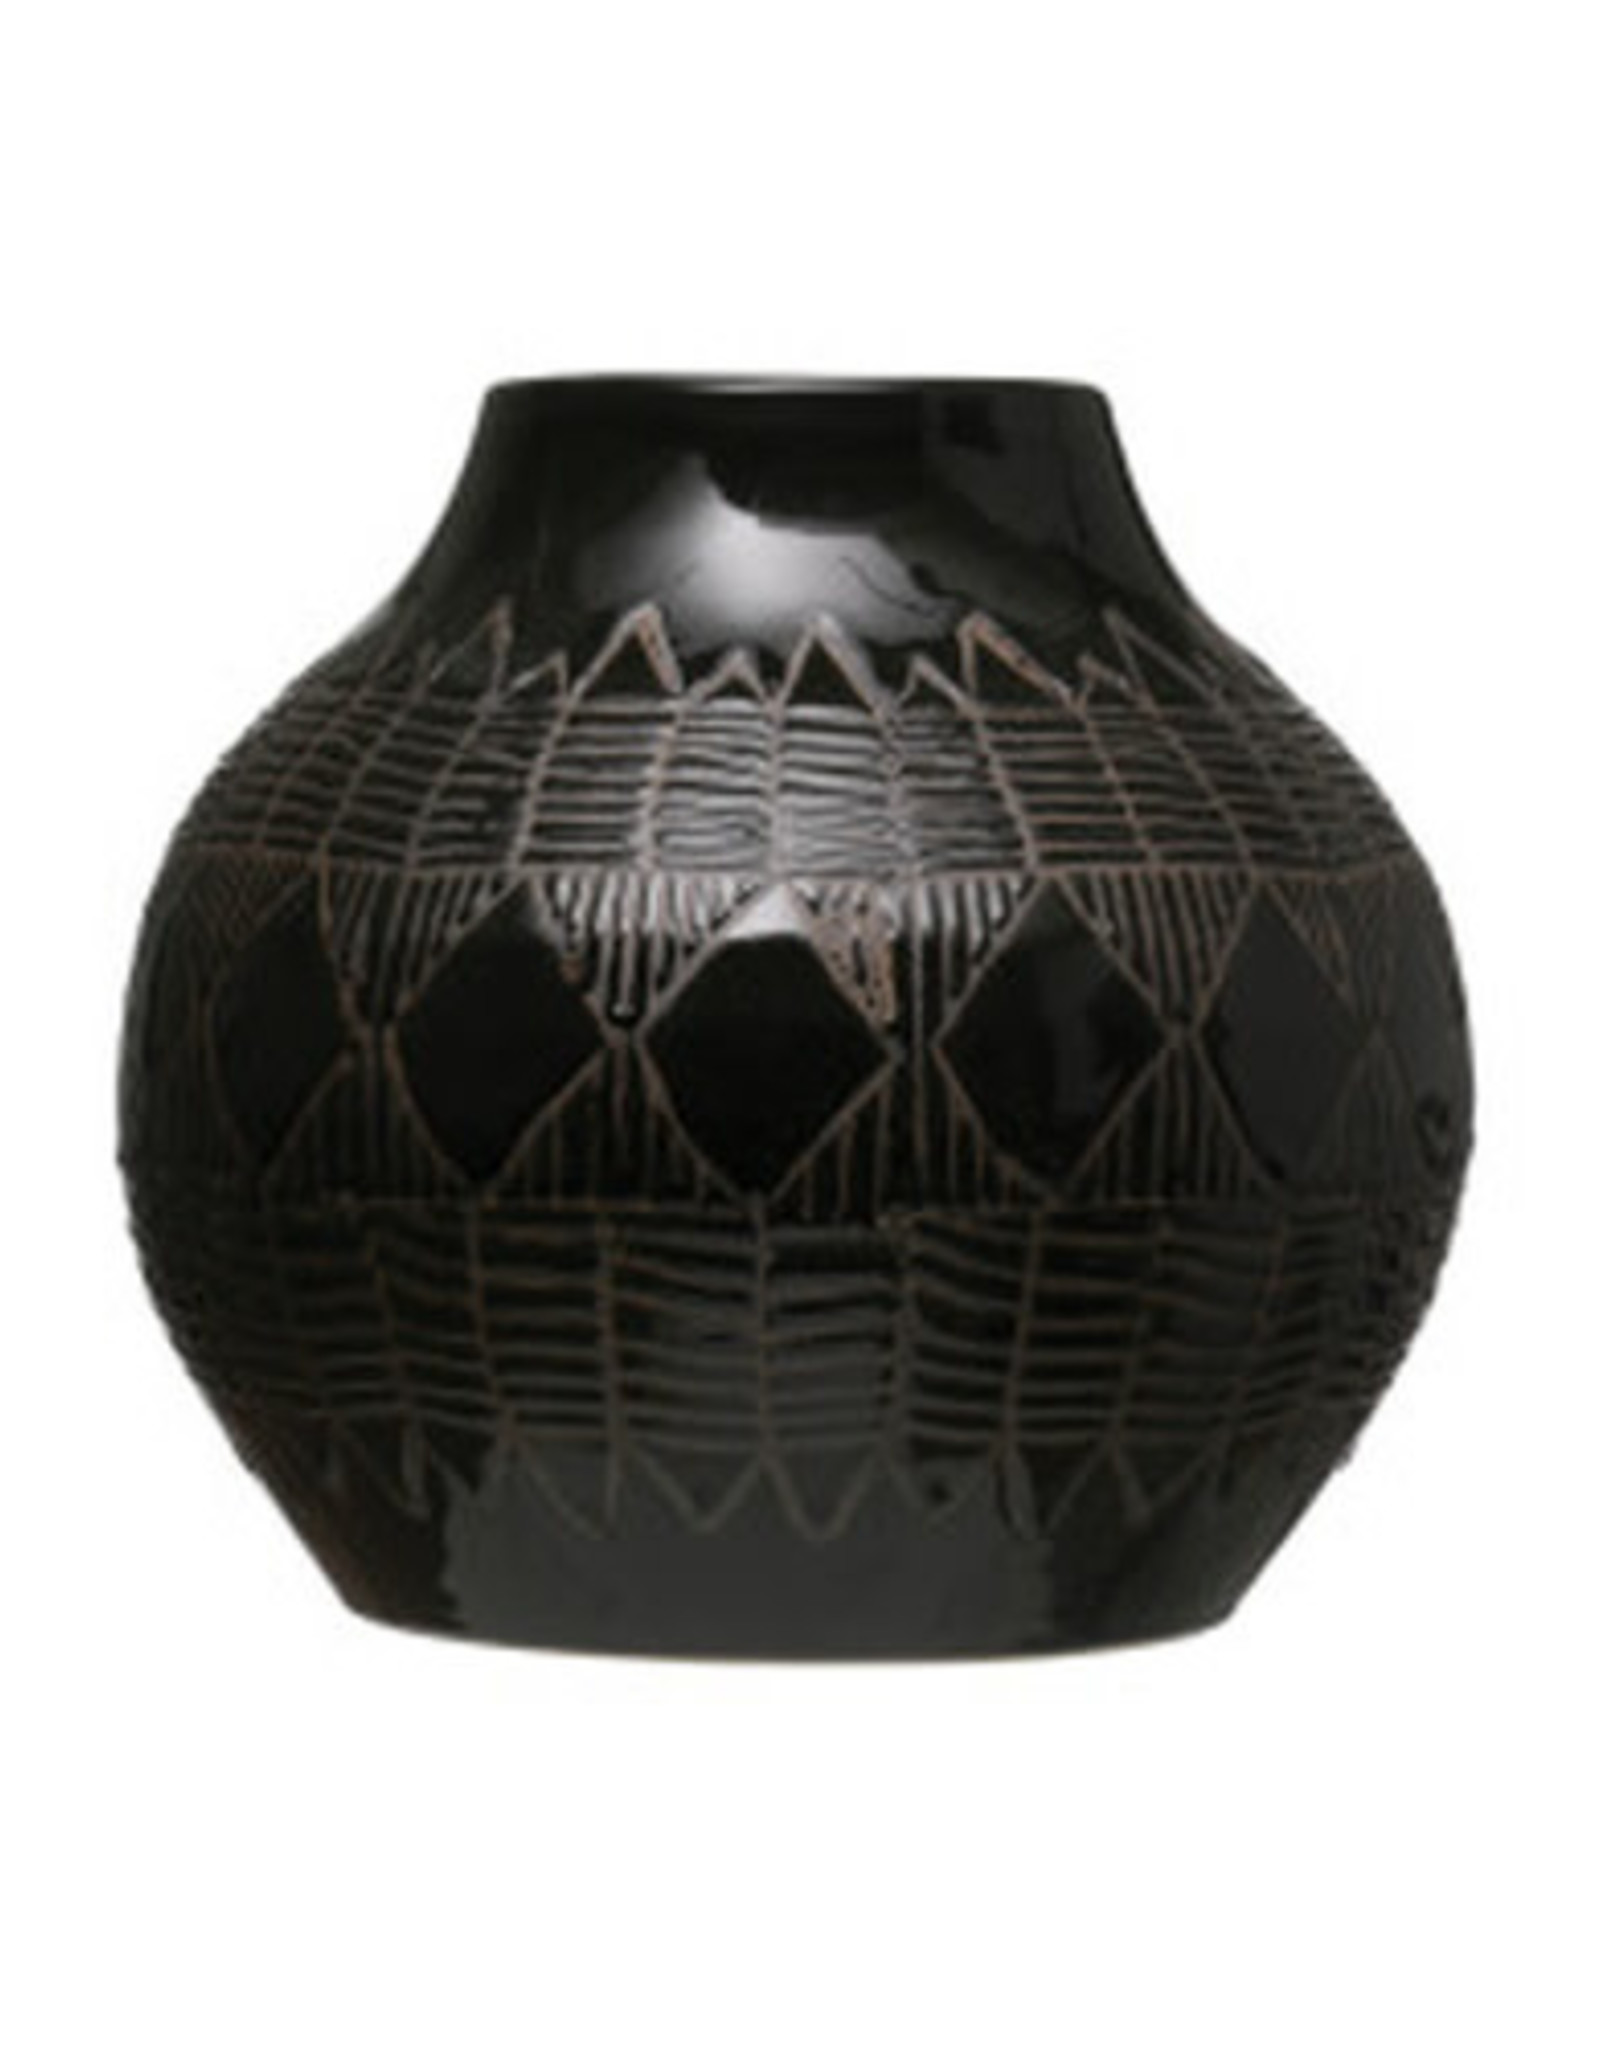 Etched Black Stoneware Vase